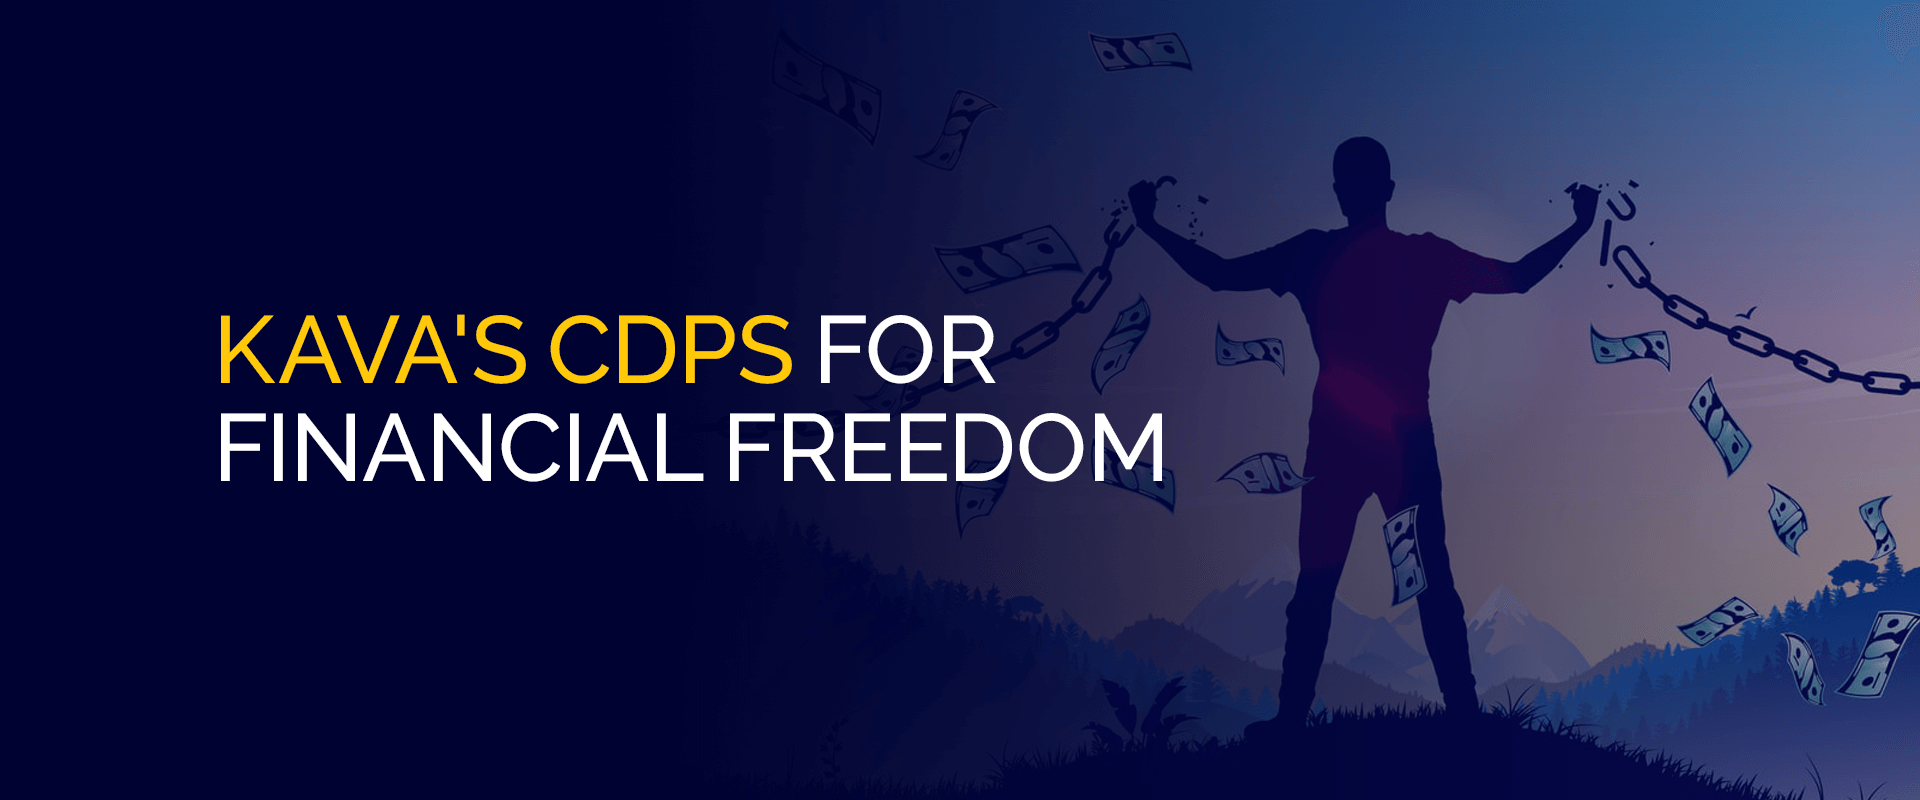 I CDP di Kava per la libertà finanziaria